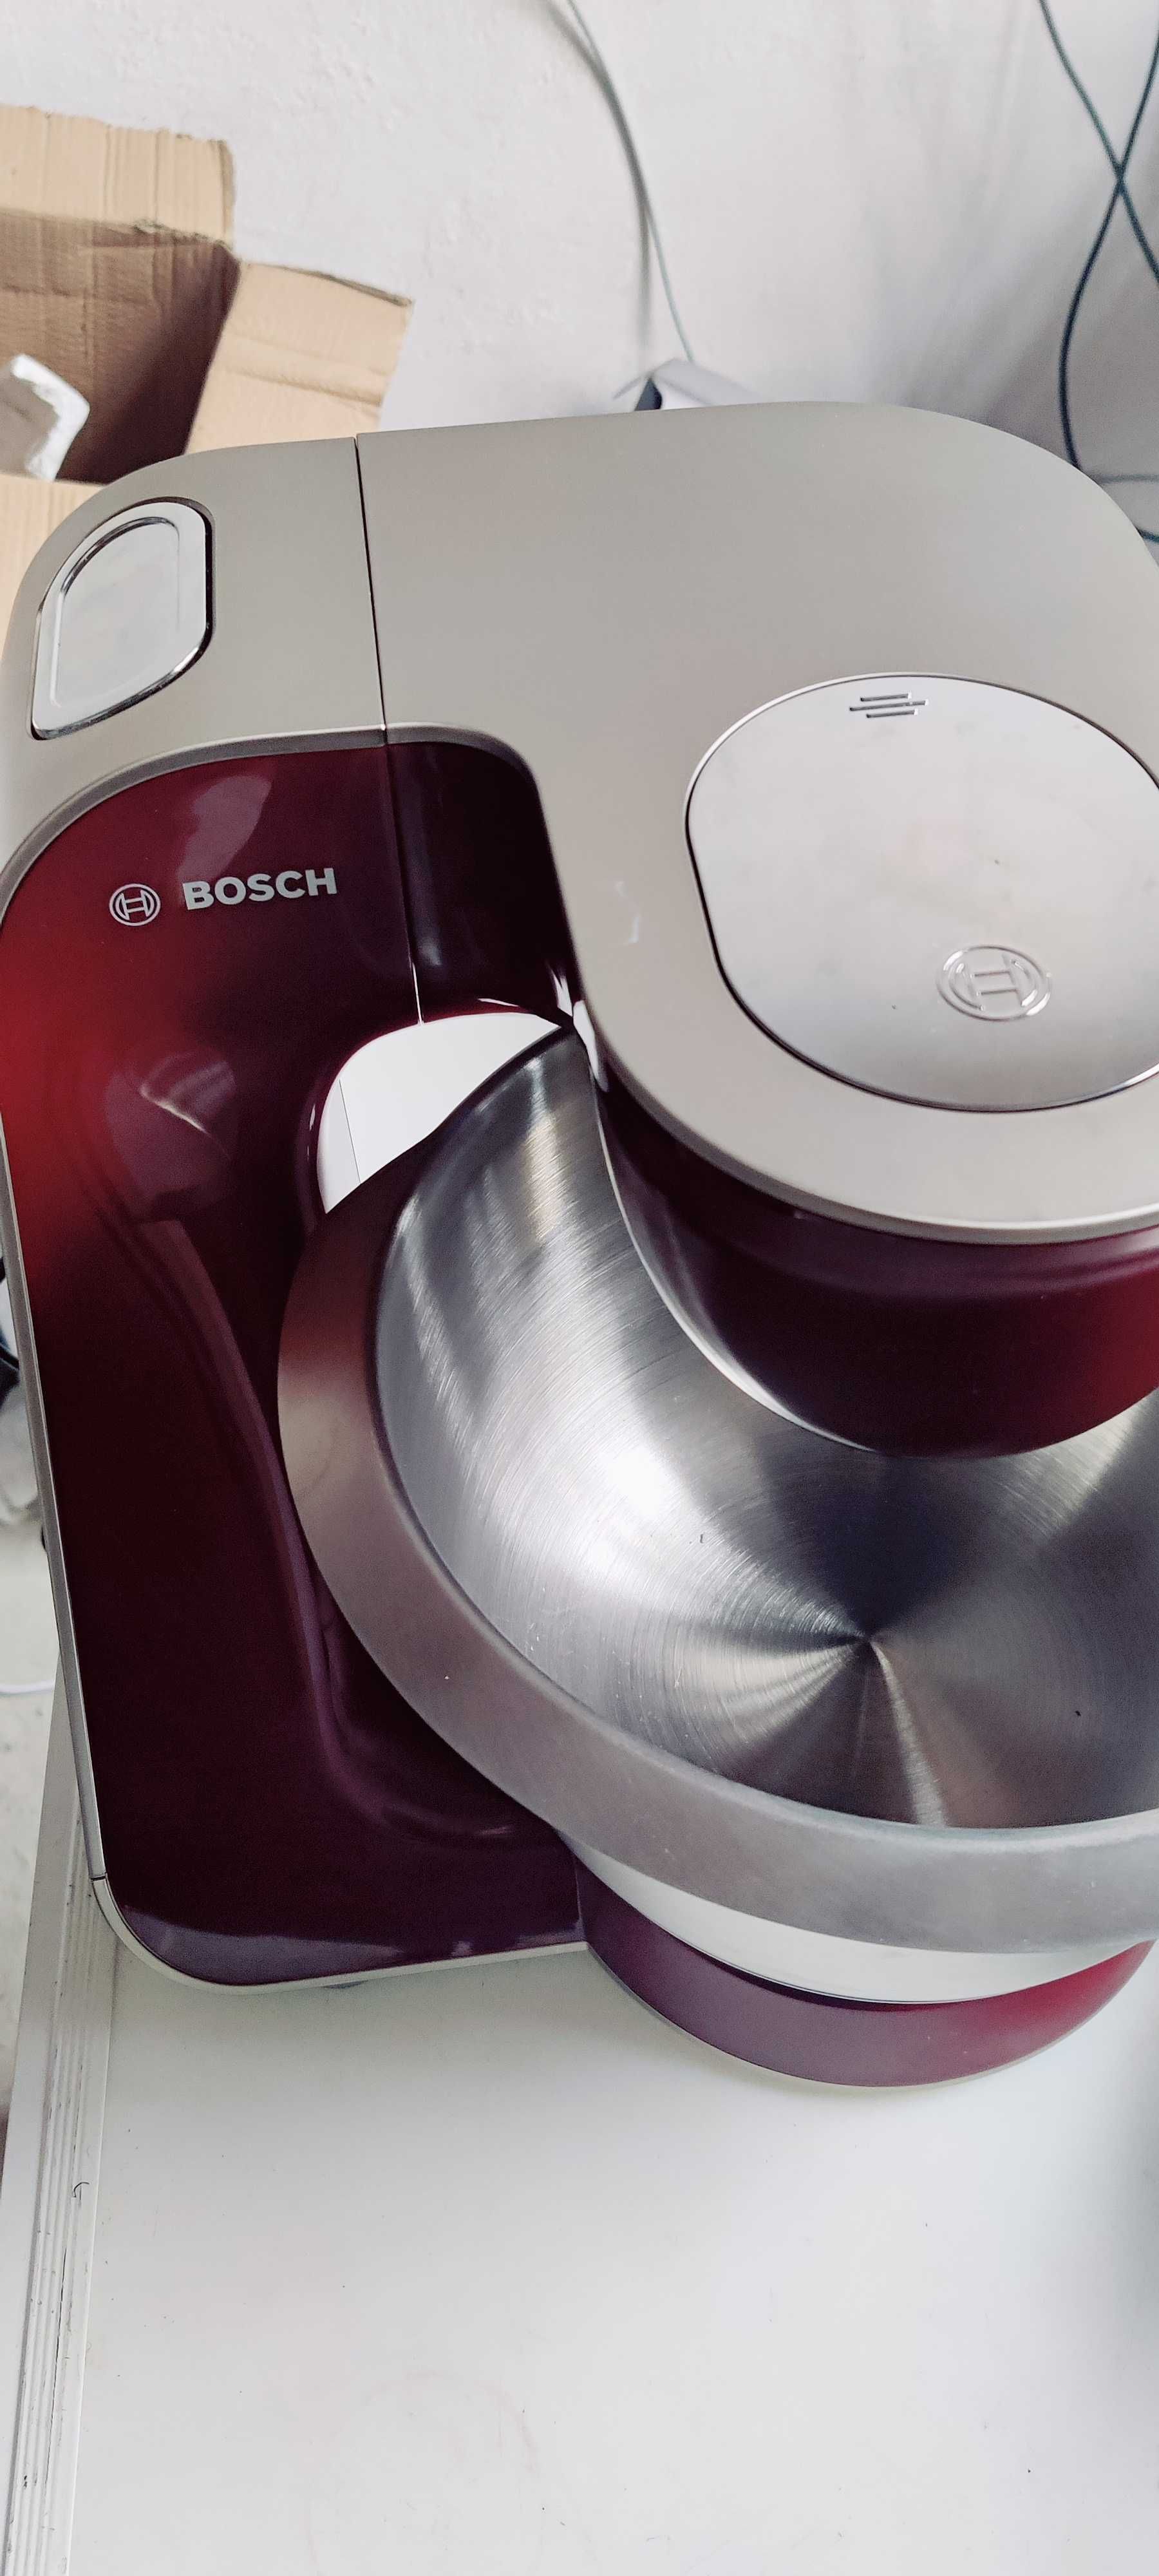 Кухонна машина Bosch mum 5